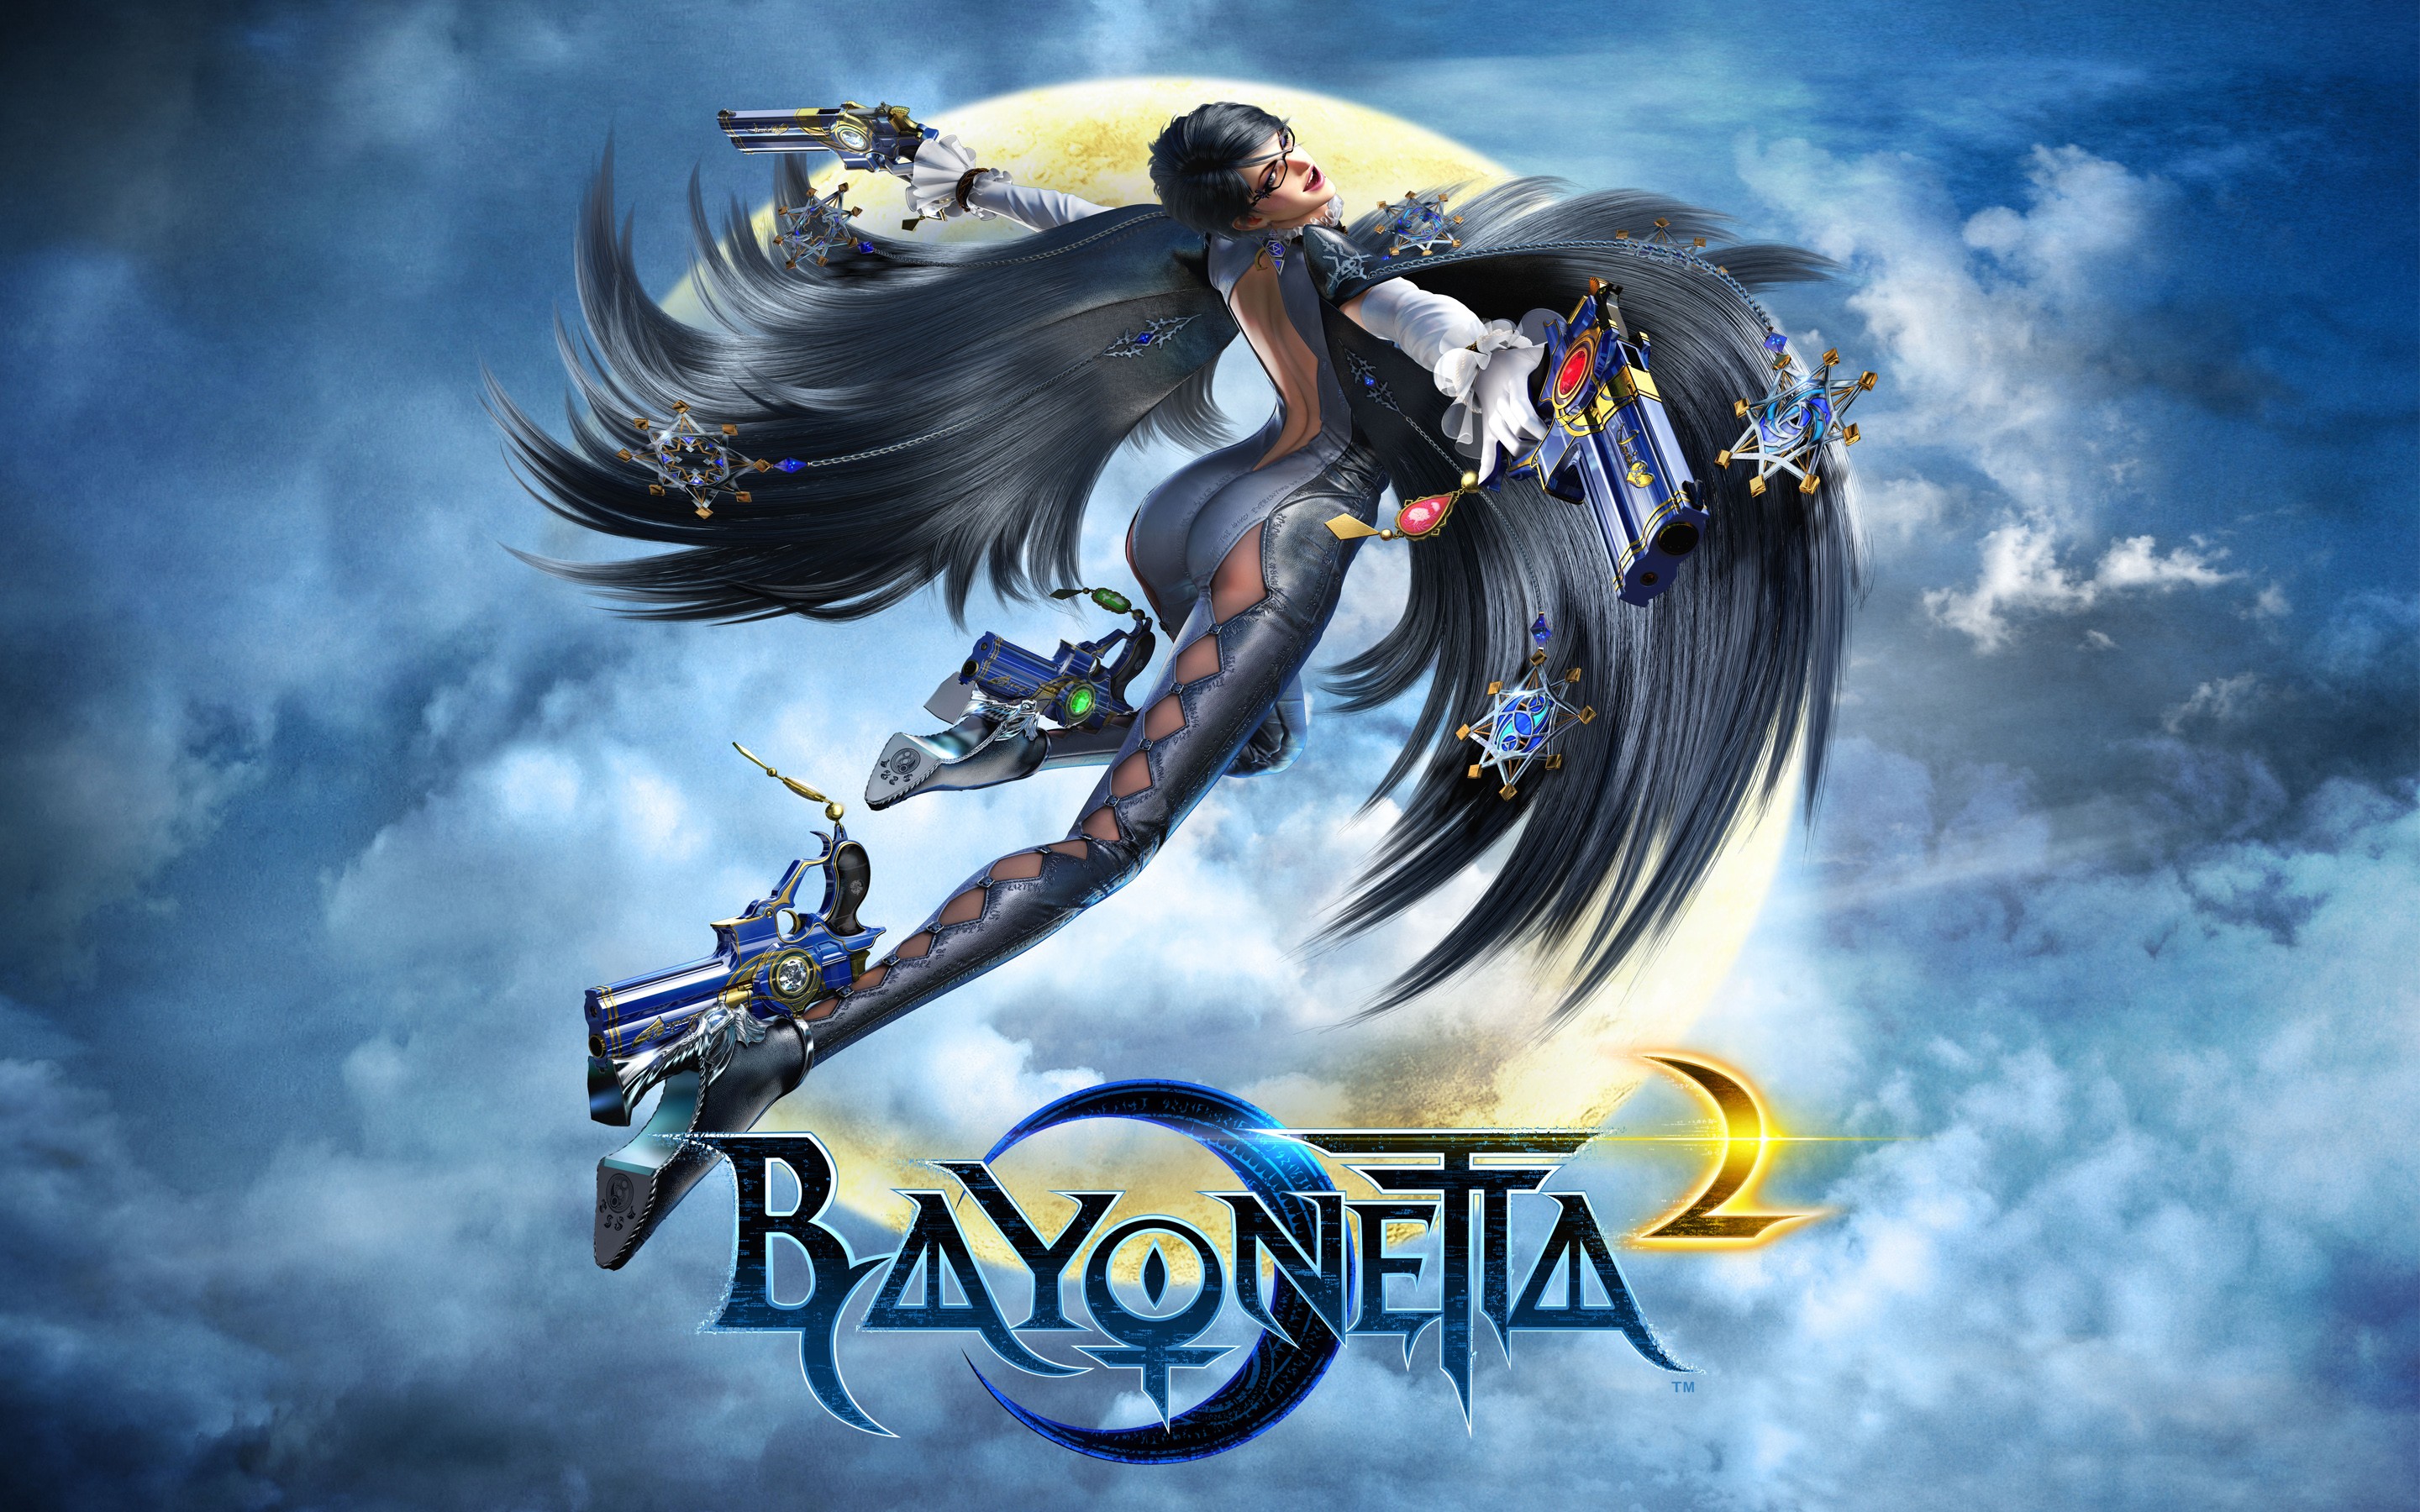 General 2880x1800 Bayonetta Bayonetta 2 Wii U Nintendo video games video game art video game girls dark hair long hair girls with guns women Moon sky